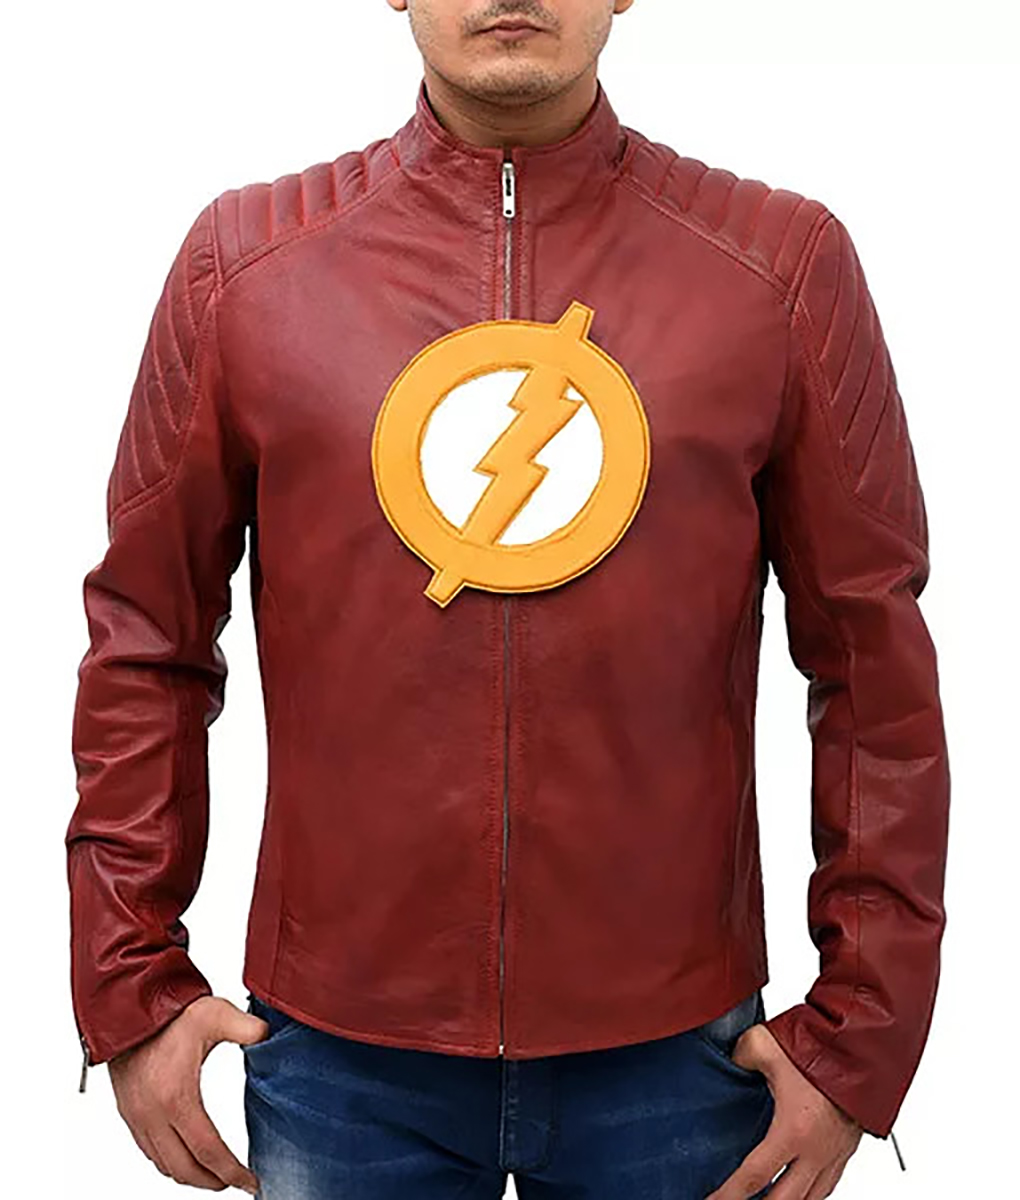 The Flash Season 2 Ezra Miller Leather Jacket